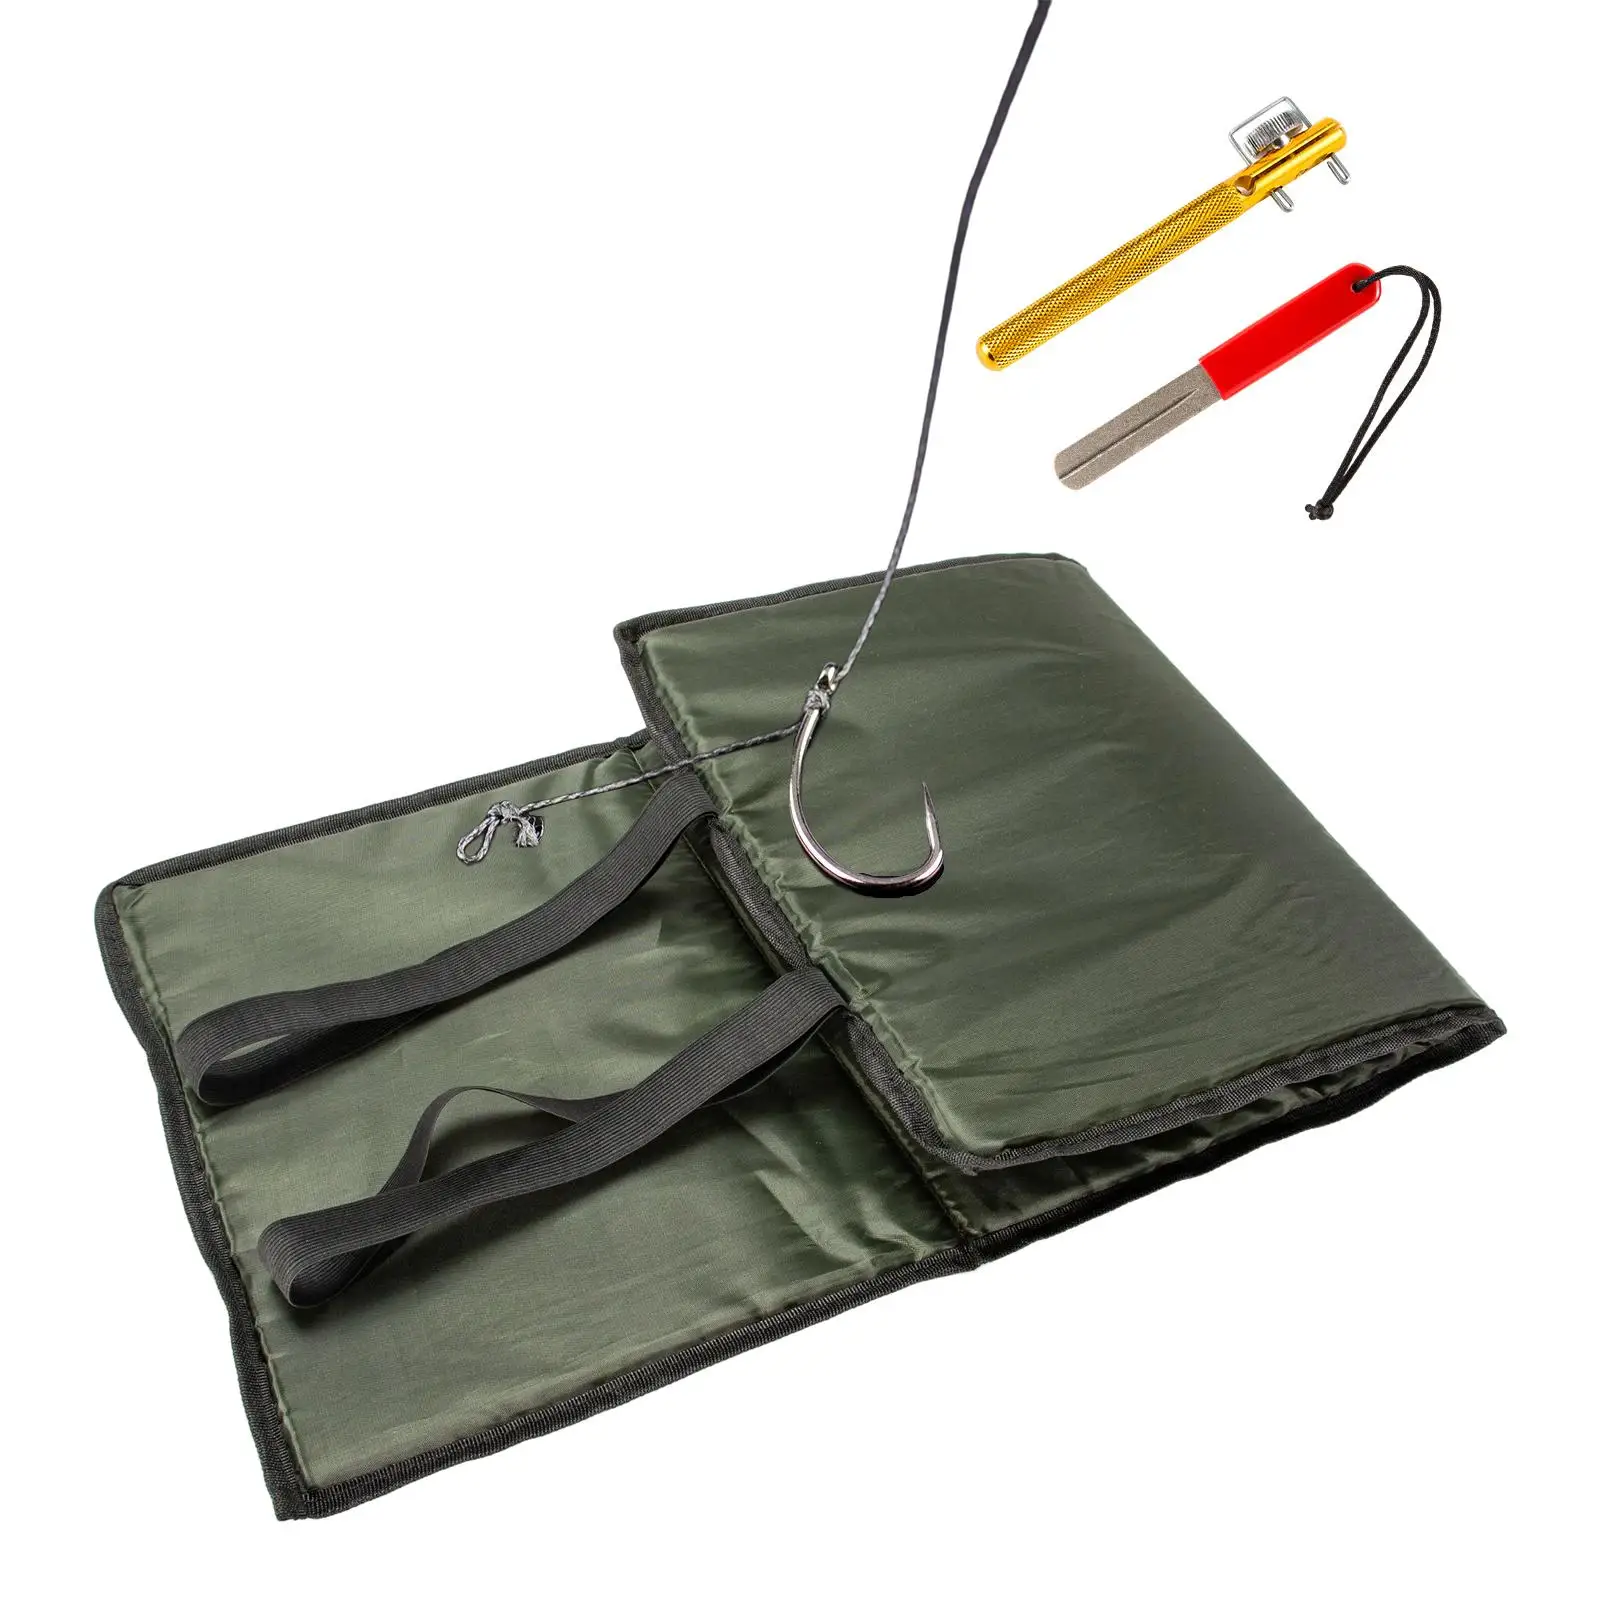 Folding Unhooking Mat, Folded Cushion Seat Pad Fish Landing Mat for Outdoor Activities